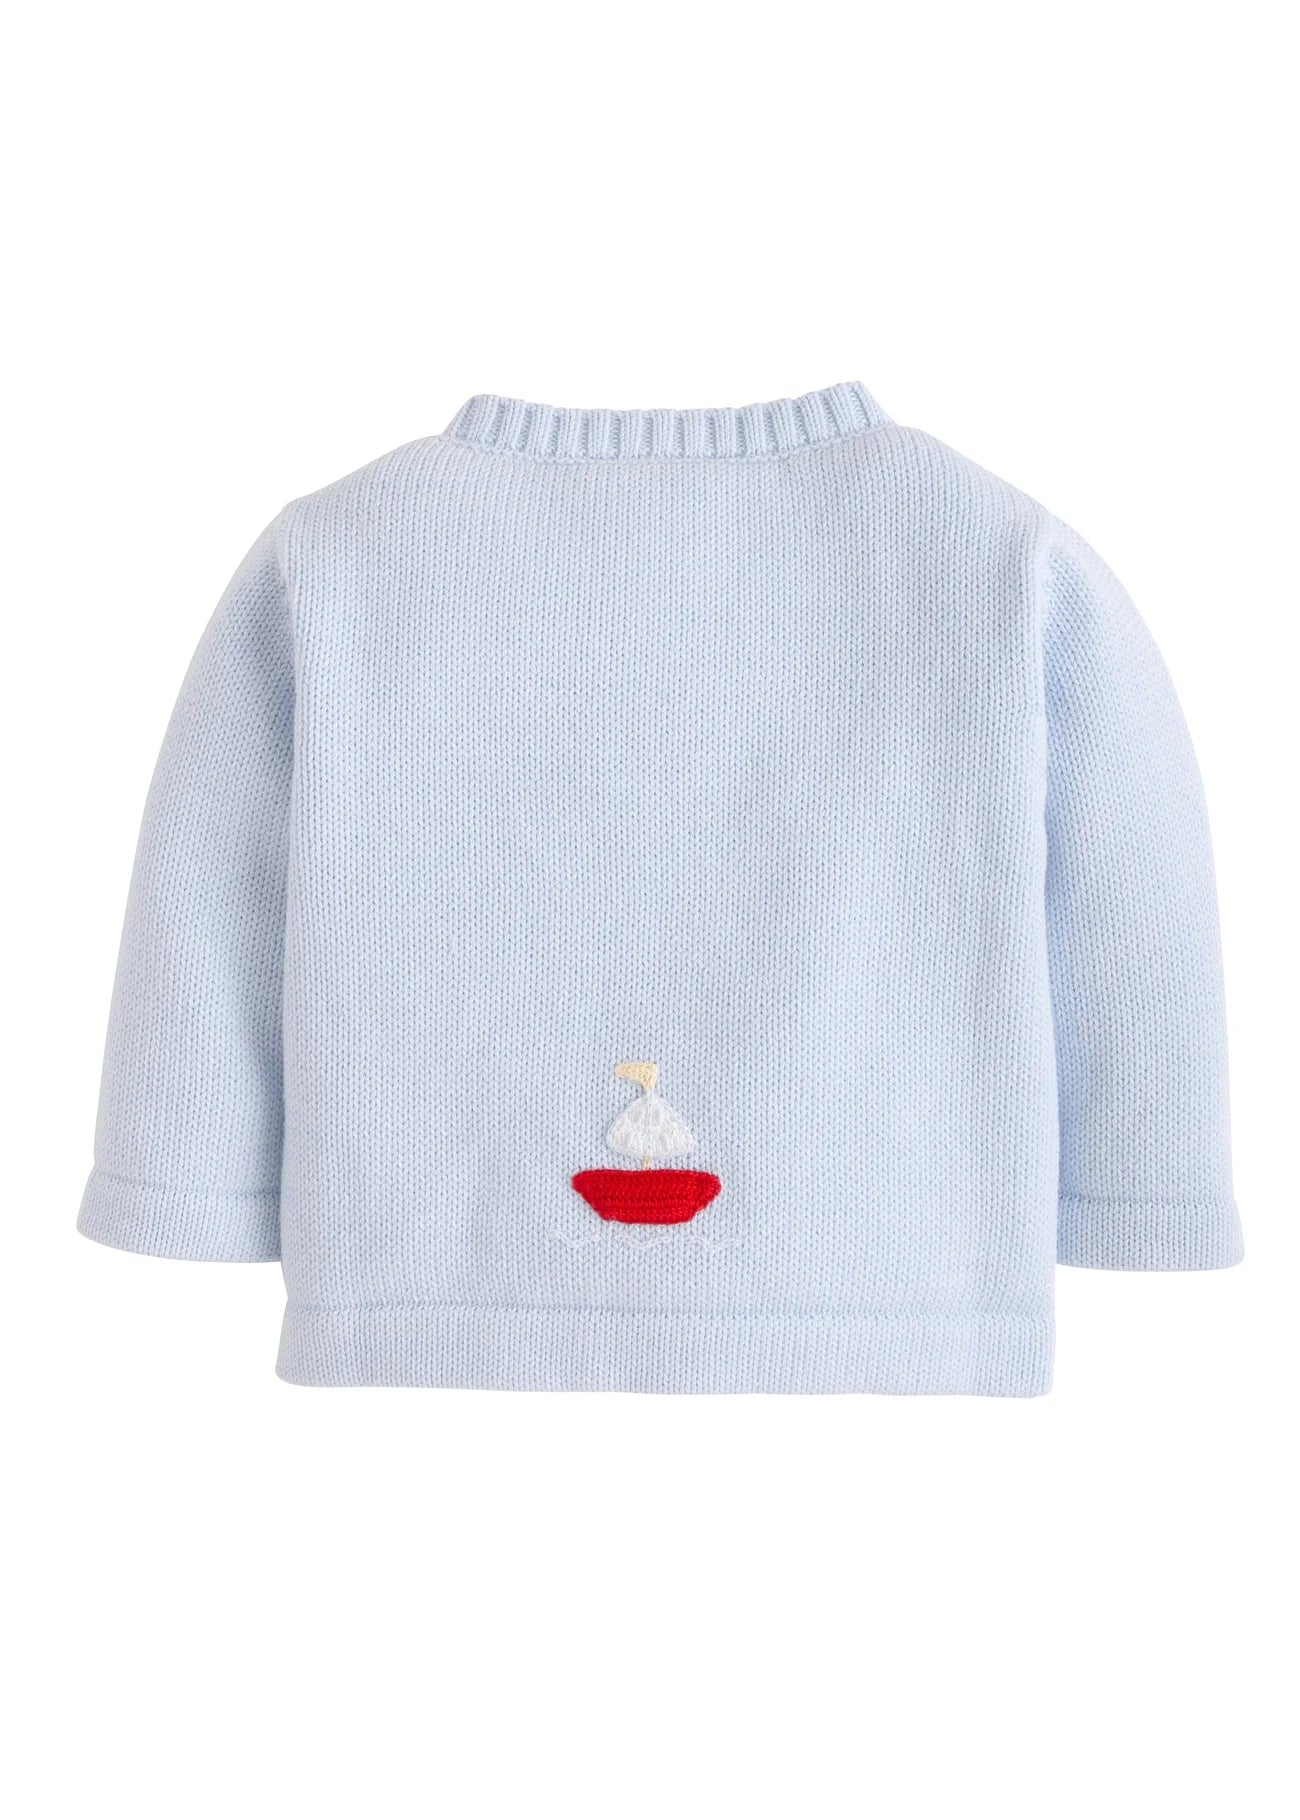 Little English Sailboat Crochet Cardigan Sweater